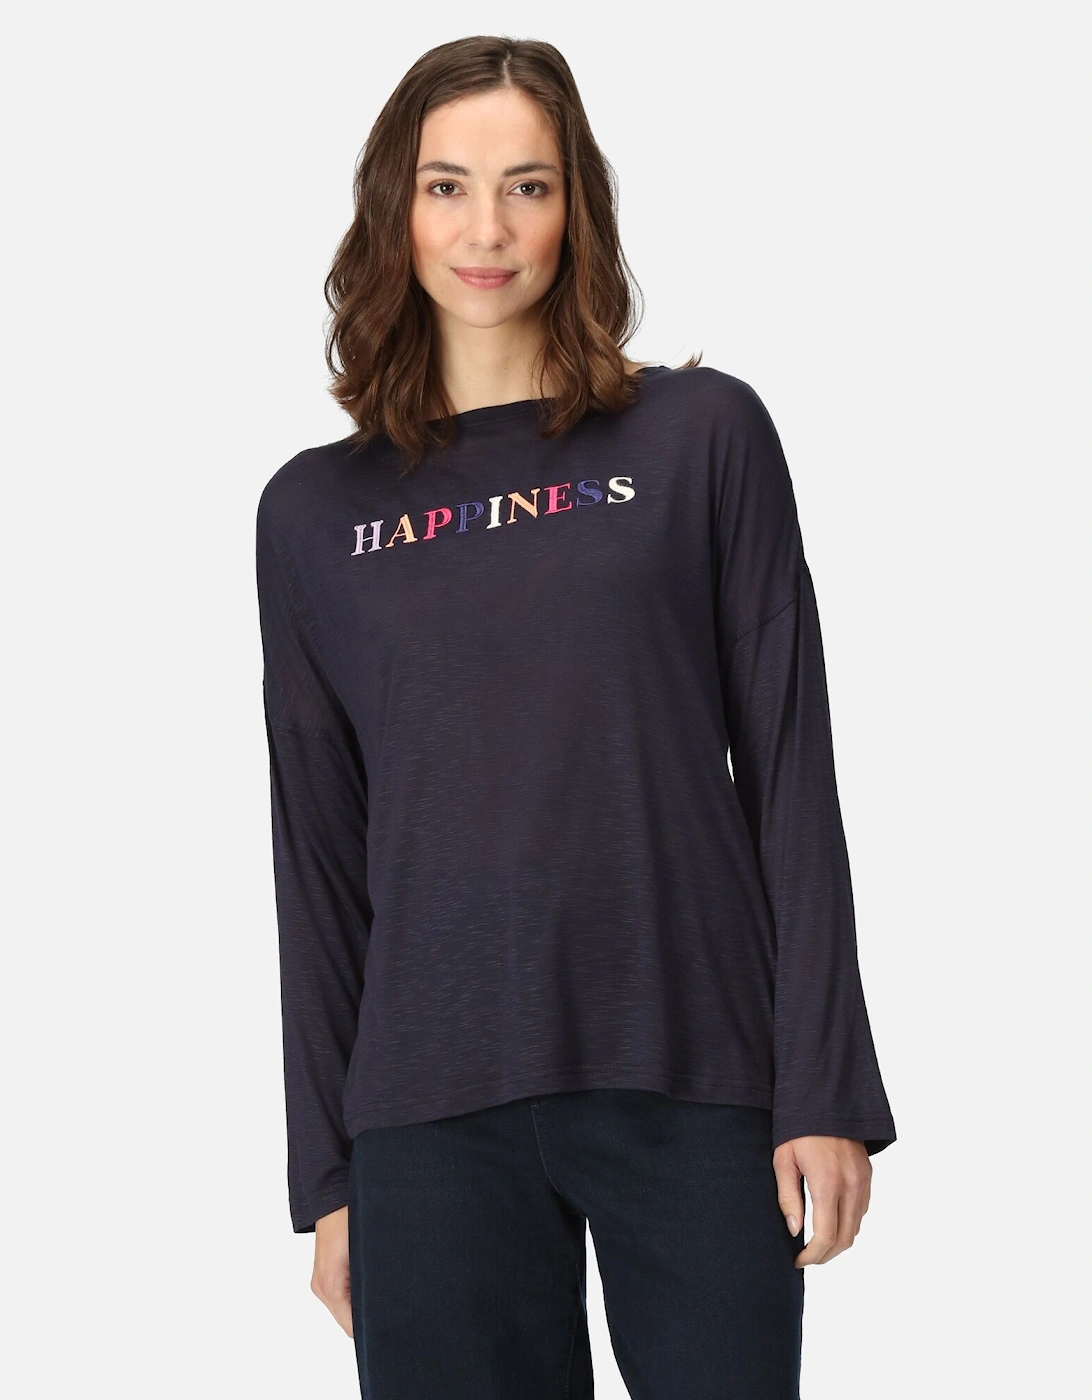 Womens/Ladies Carlene Happiness Long-Sleeved T-Shirt